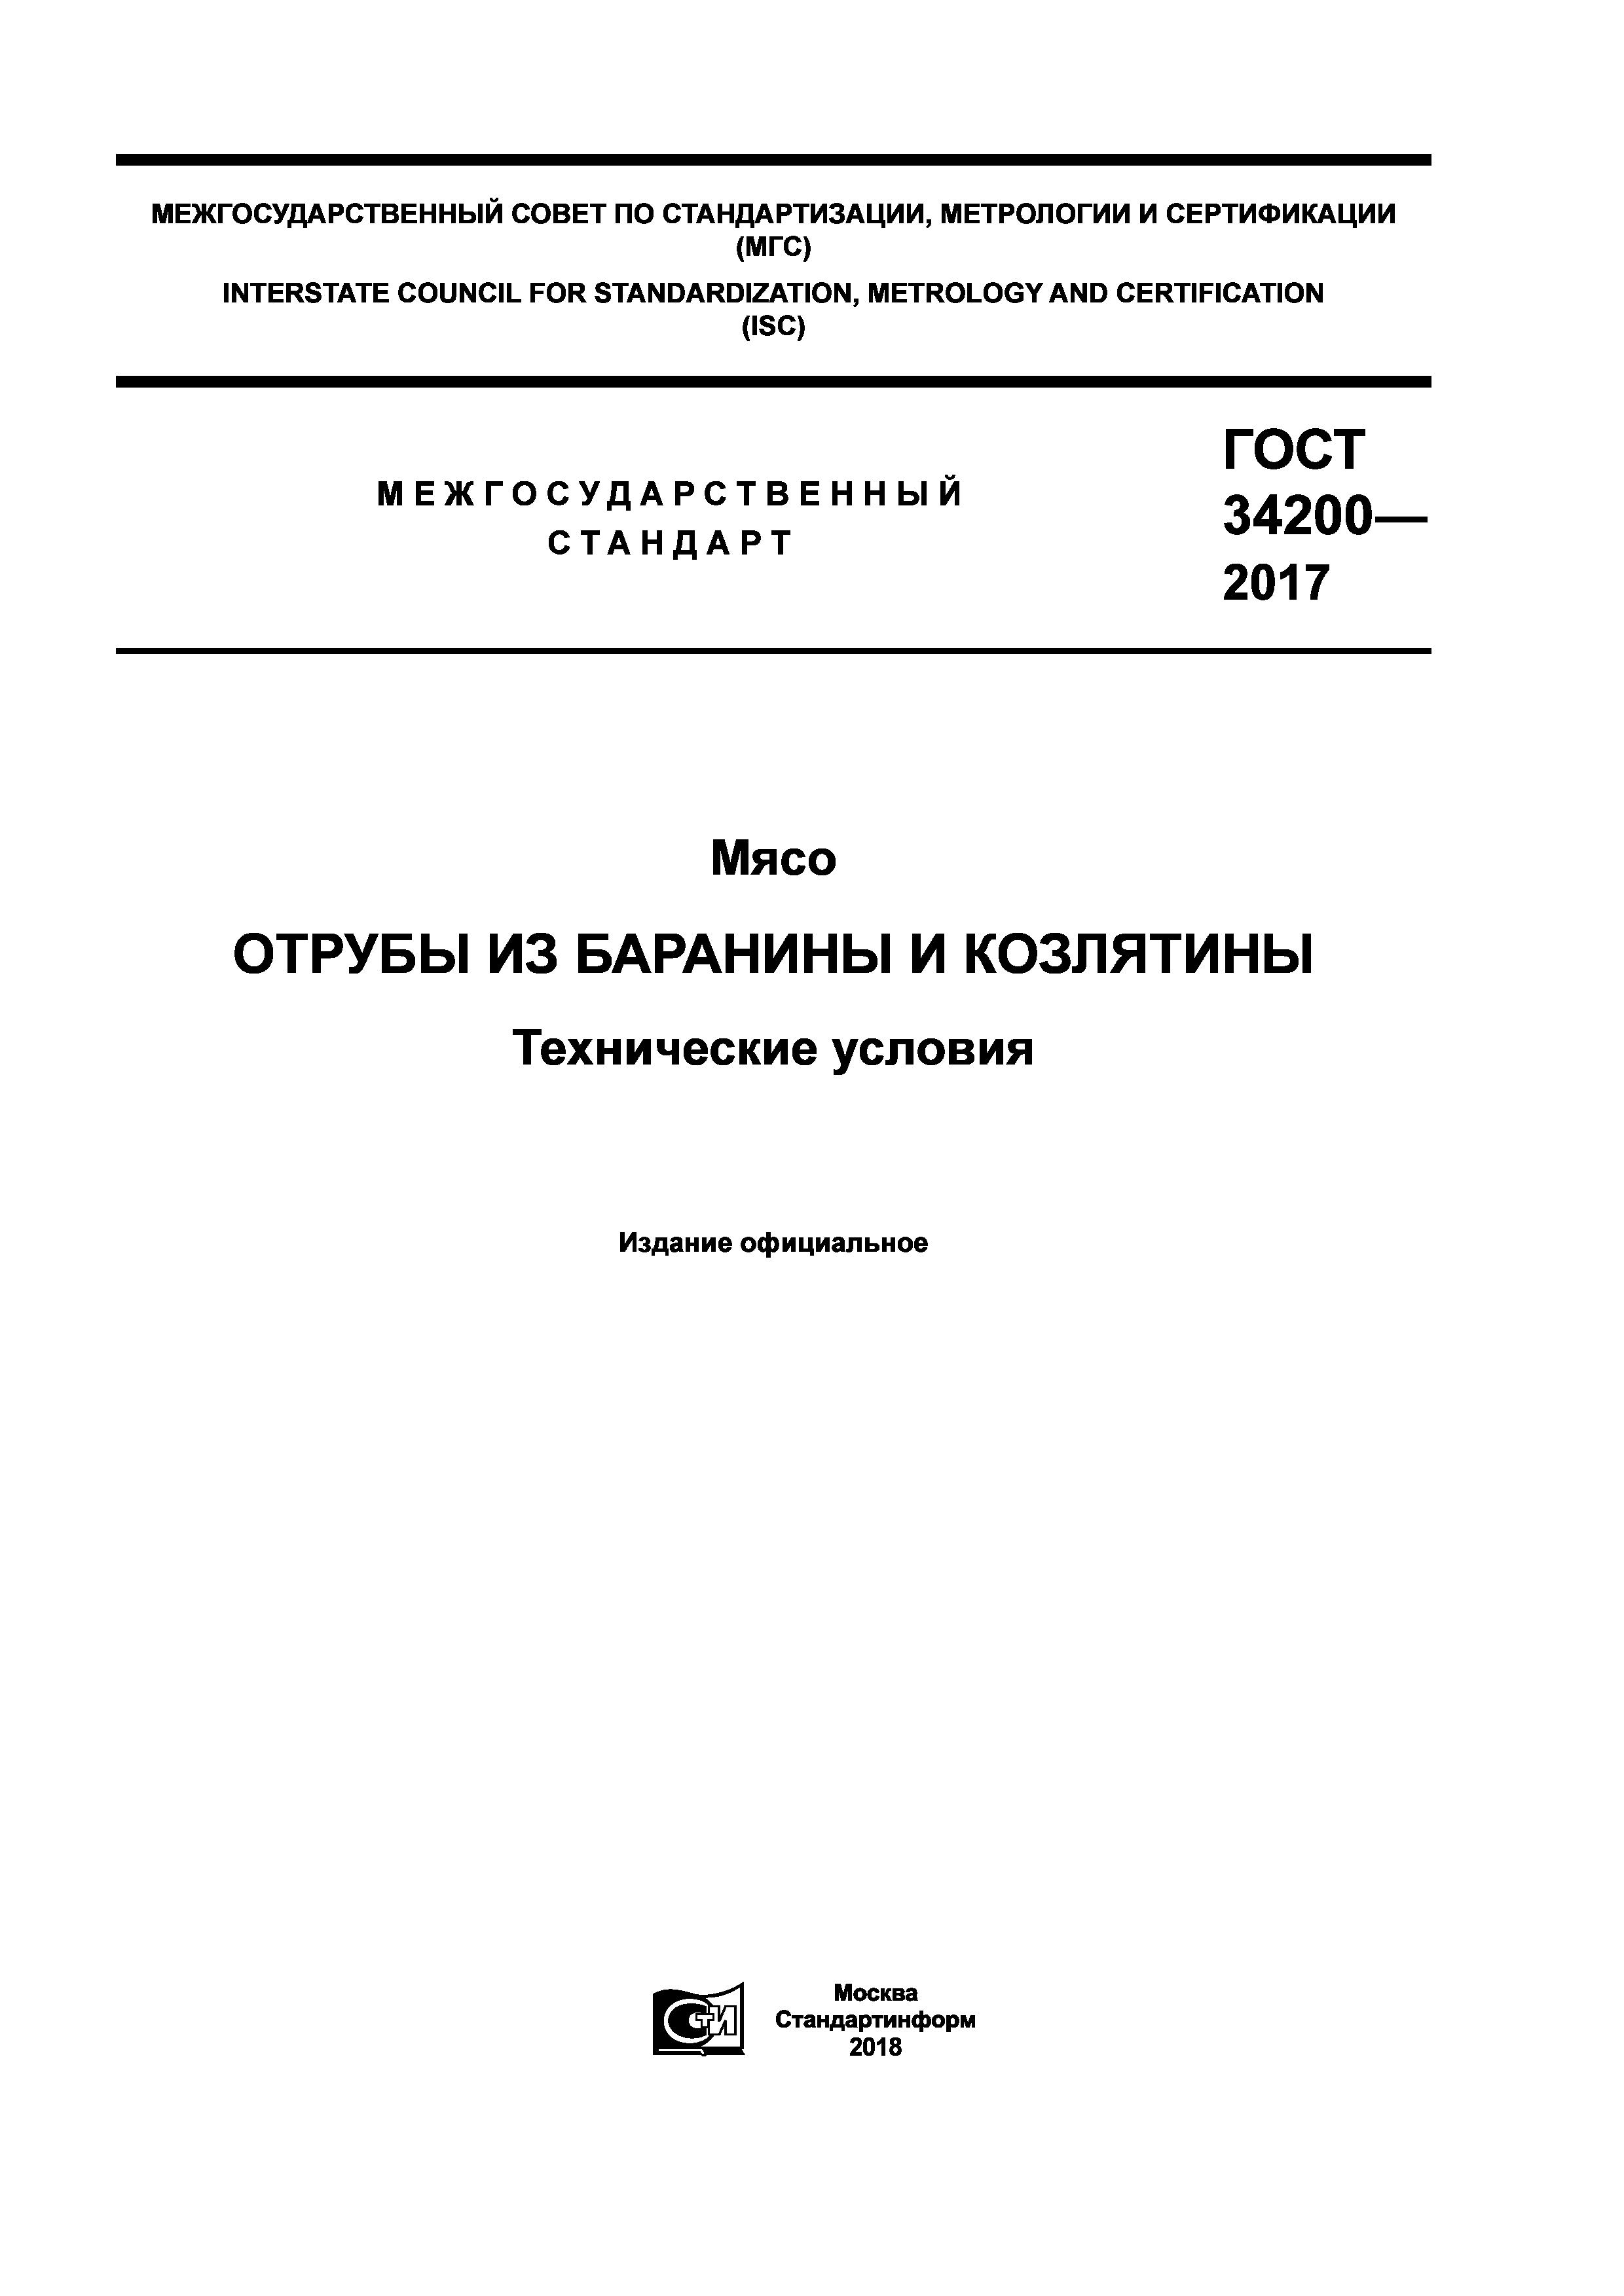 ГОСТ 34200-2017